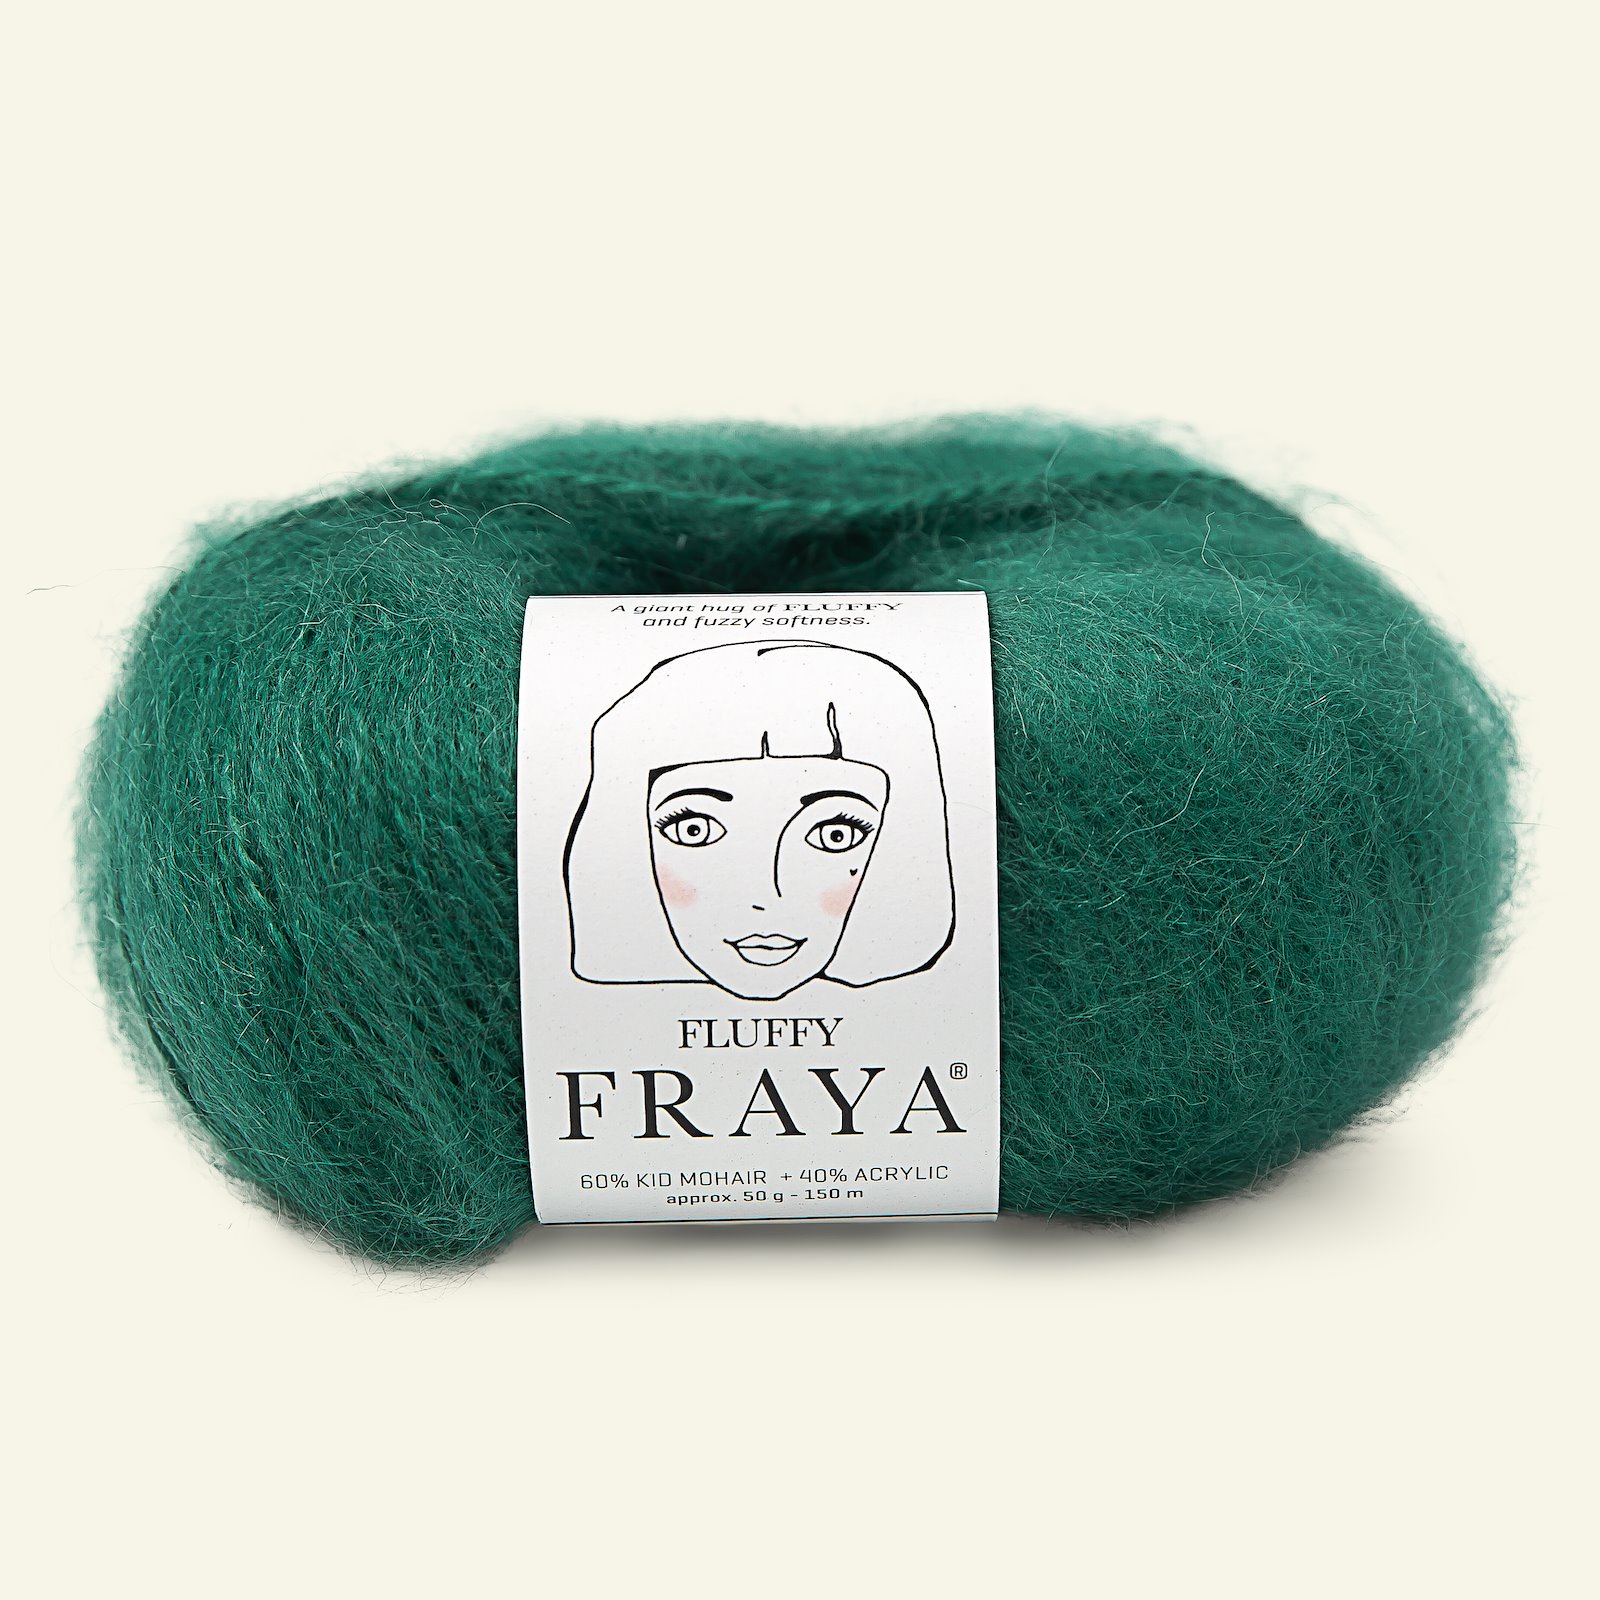 FRAYA, kid mohair mixed yarn "Fluffy", bottle green 90066326_pack